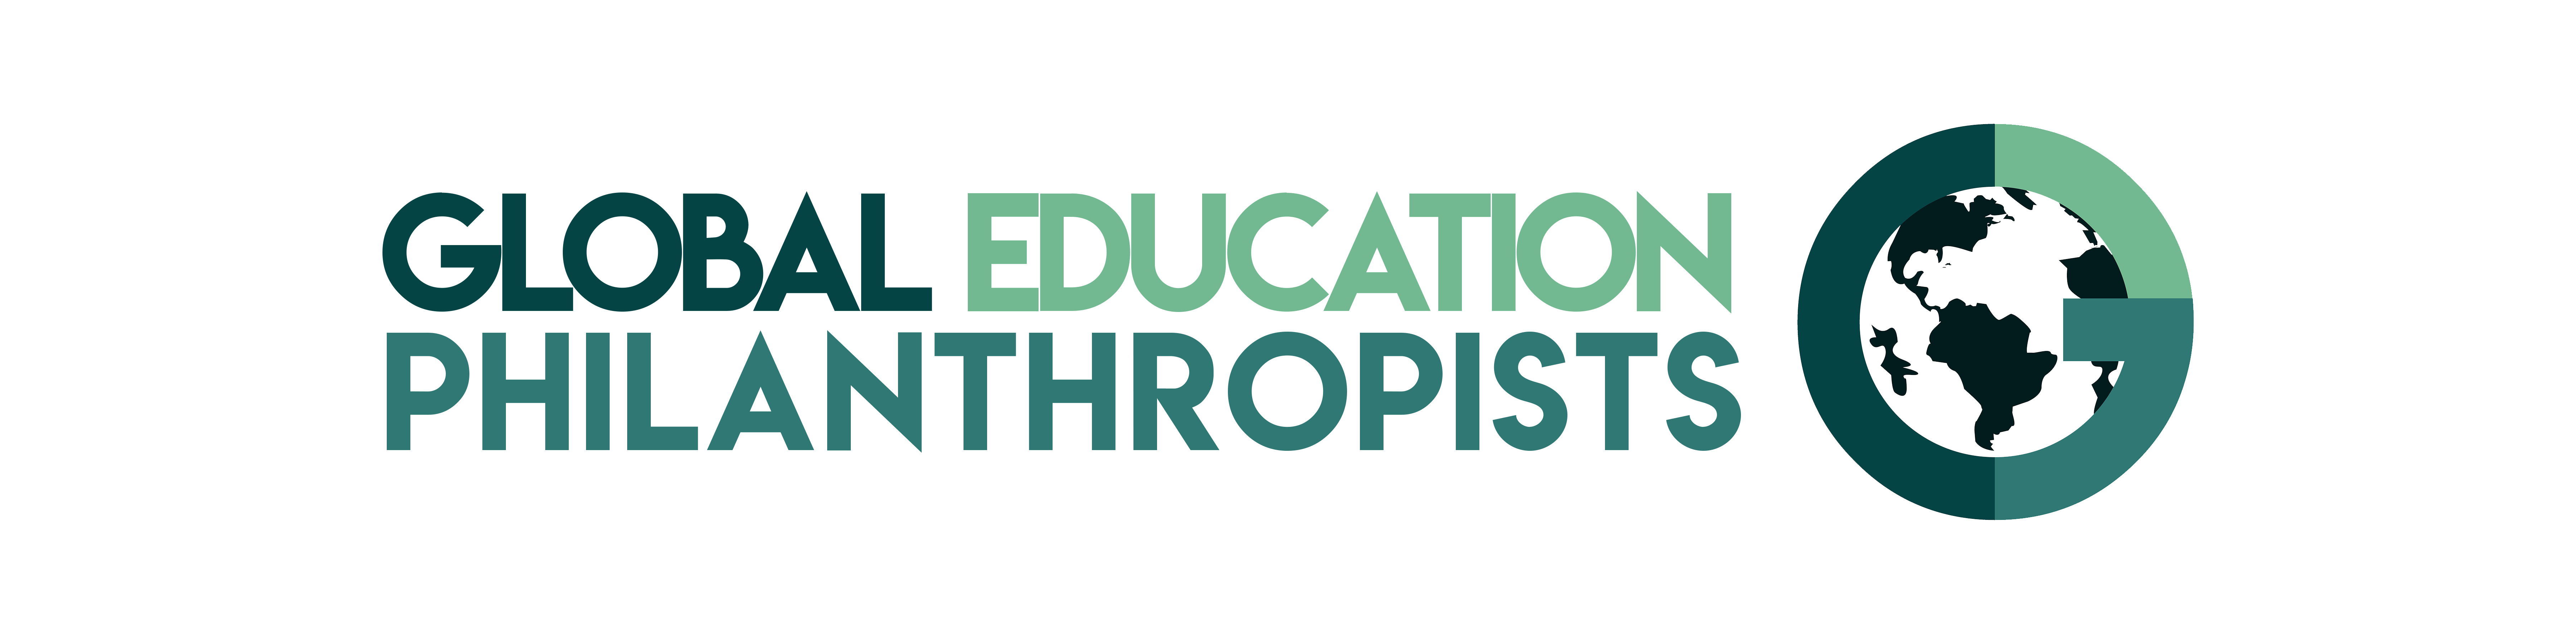 Global Education Philanthropists logo